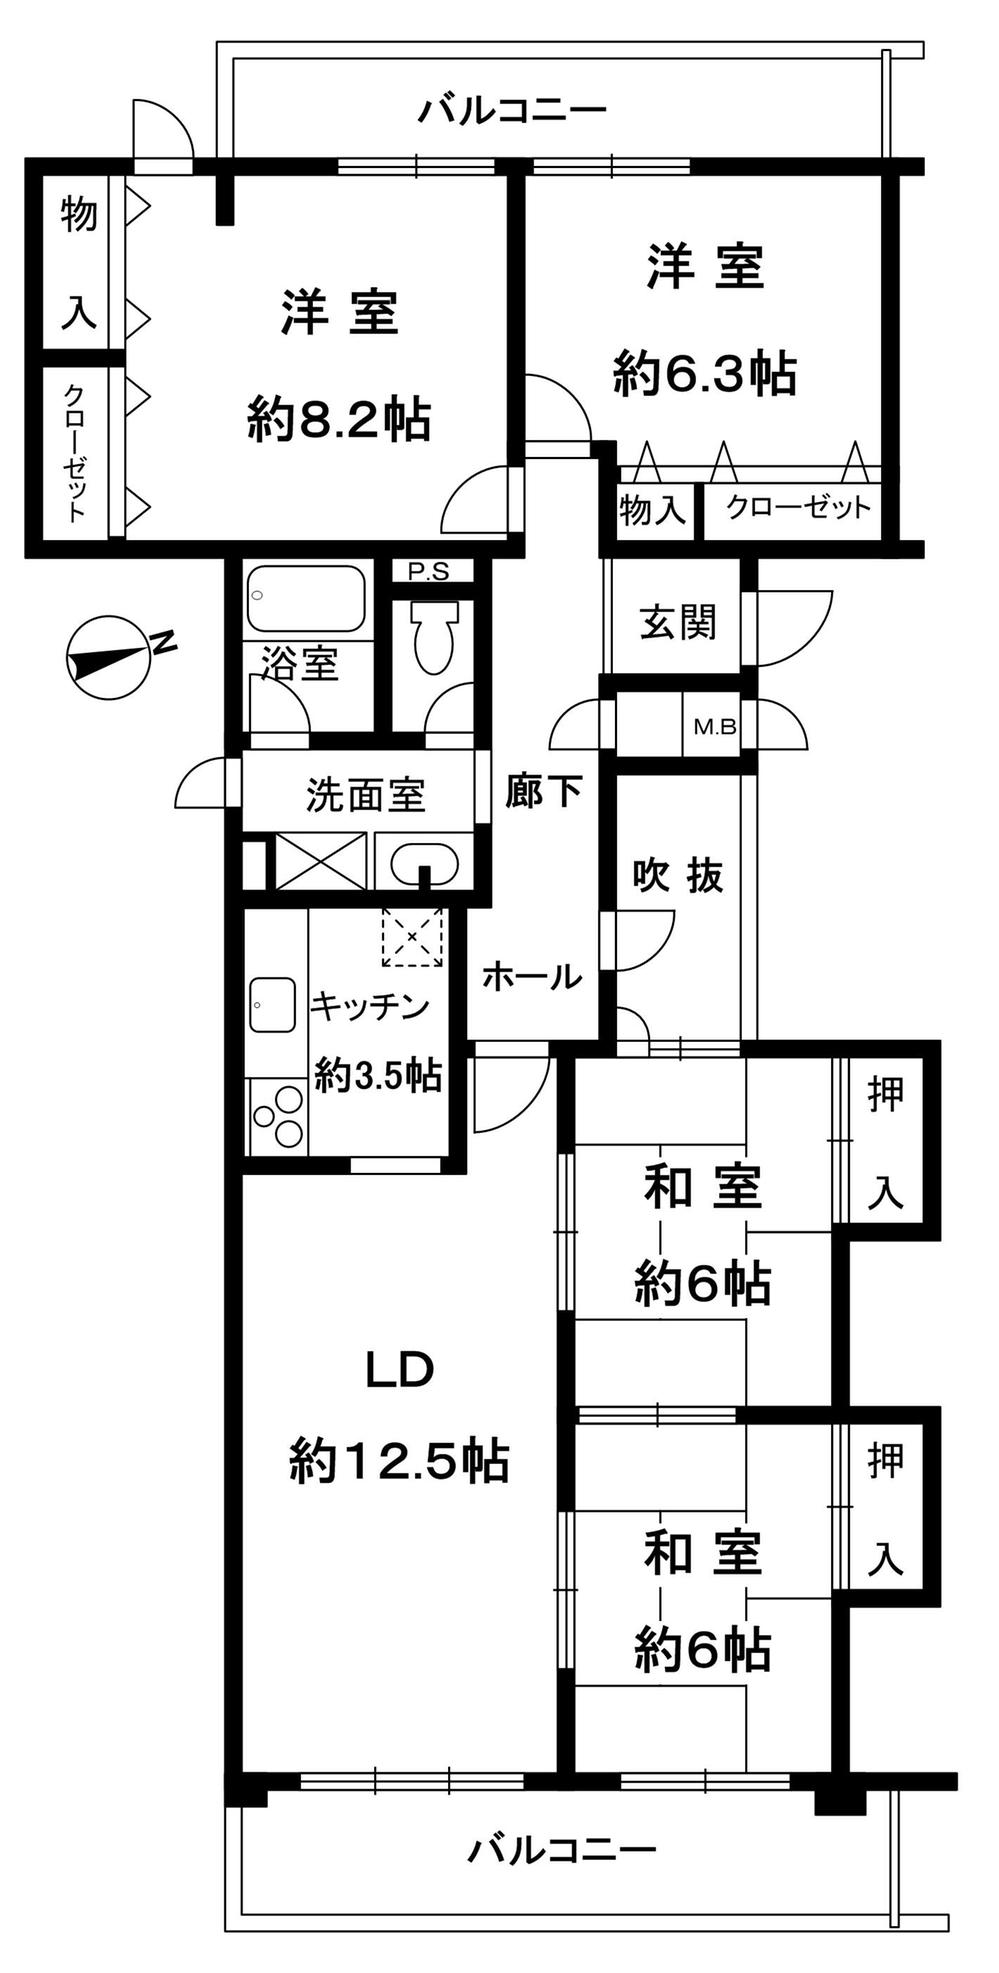 Floor plan. 4LDK, Price 17.8 million yen, Occupied area 96.34 sq m , Balcony area 17.01 sq m